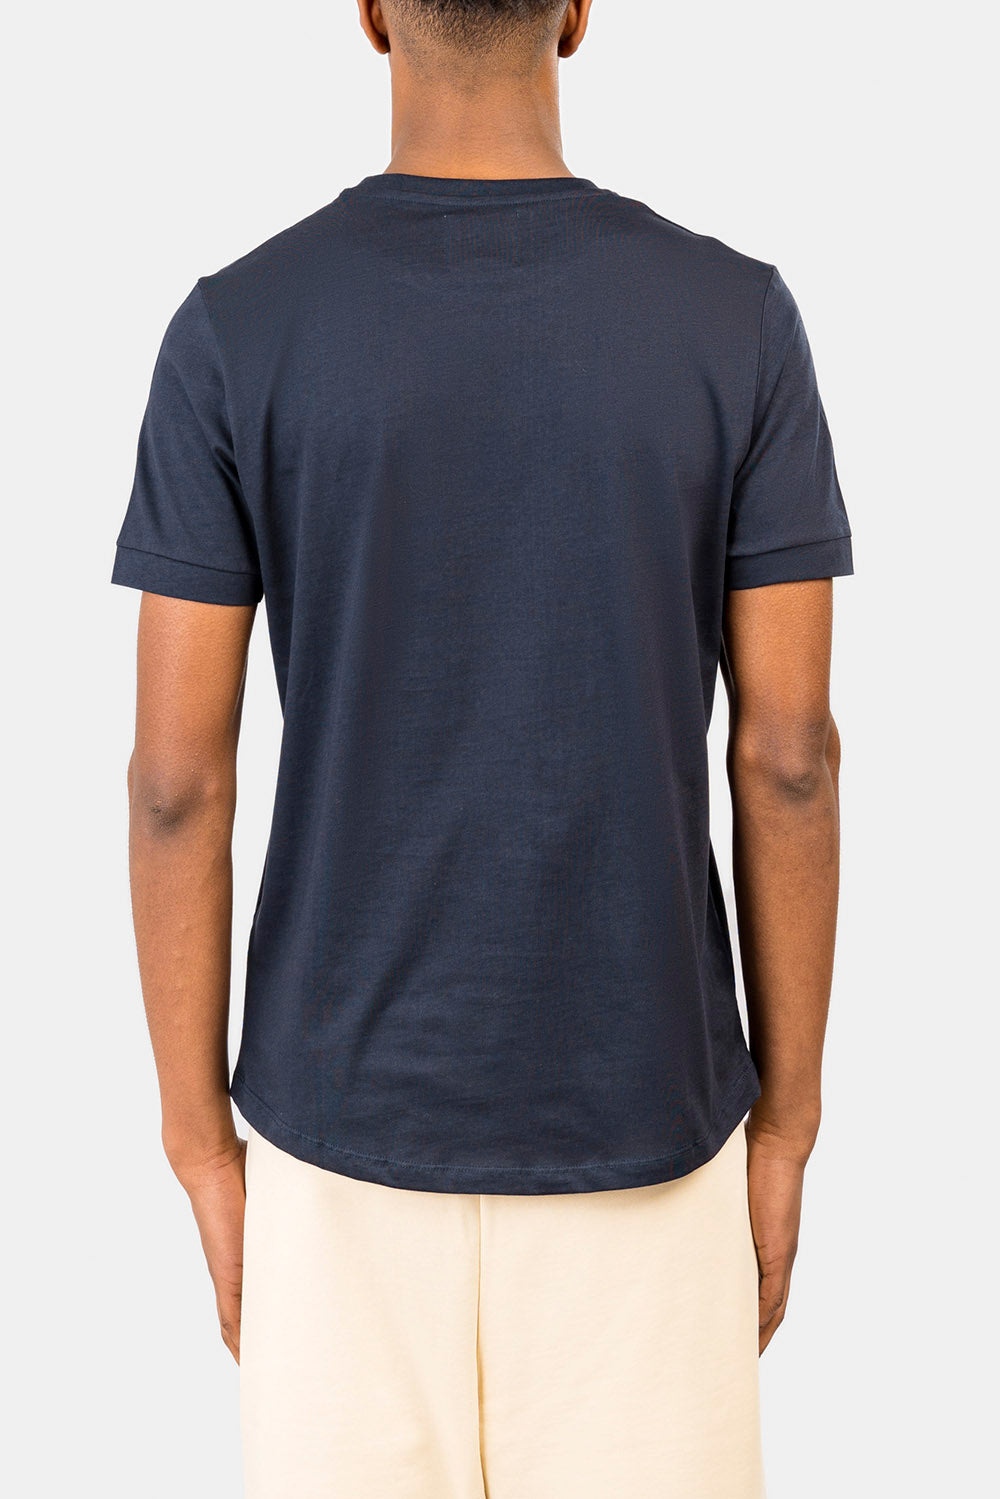 INIMIGO Classic Heart Blue Regular Fit T-Shirt Menswear